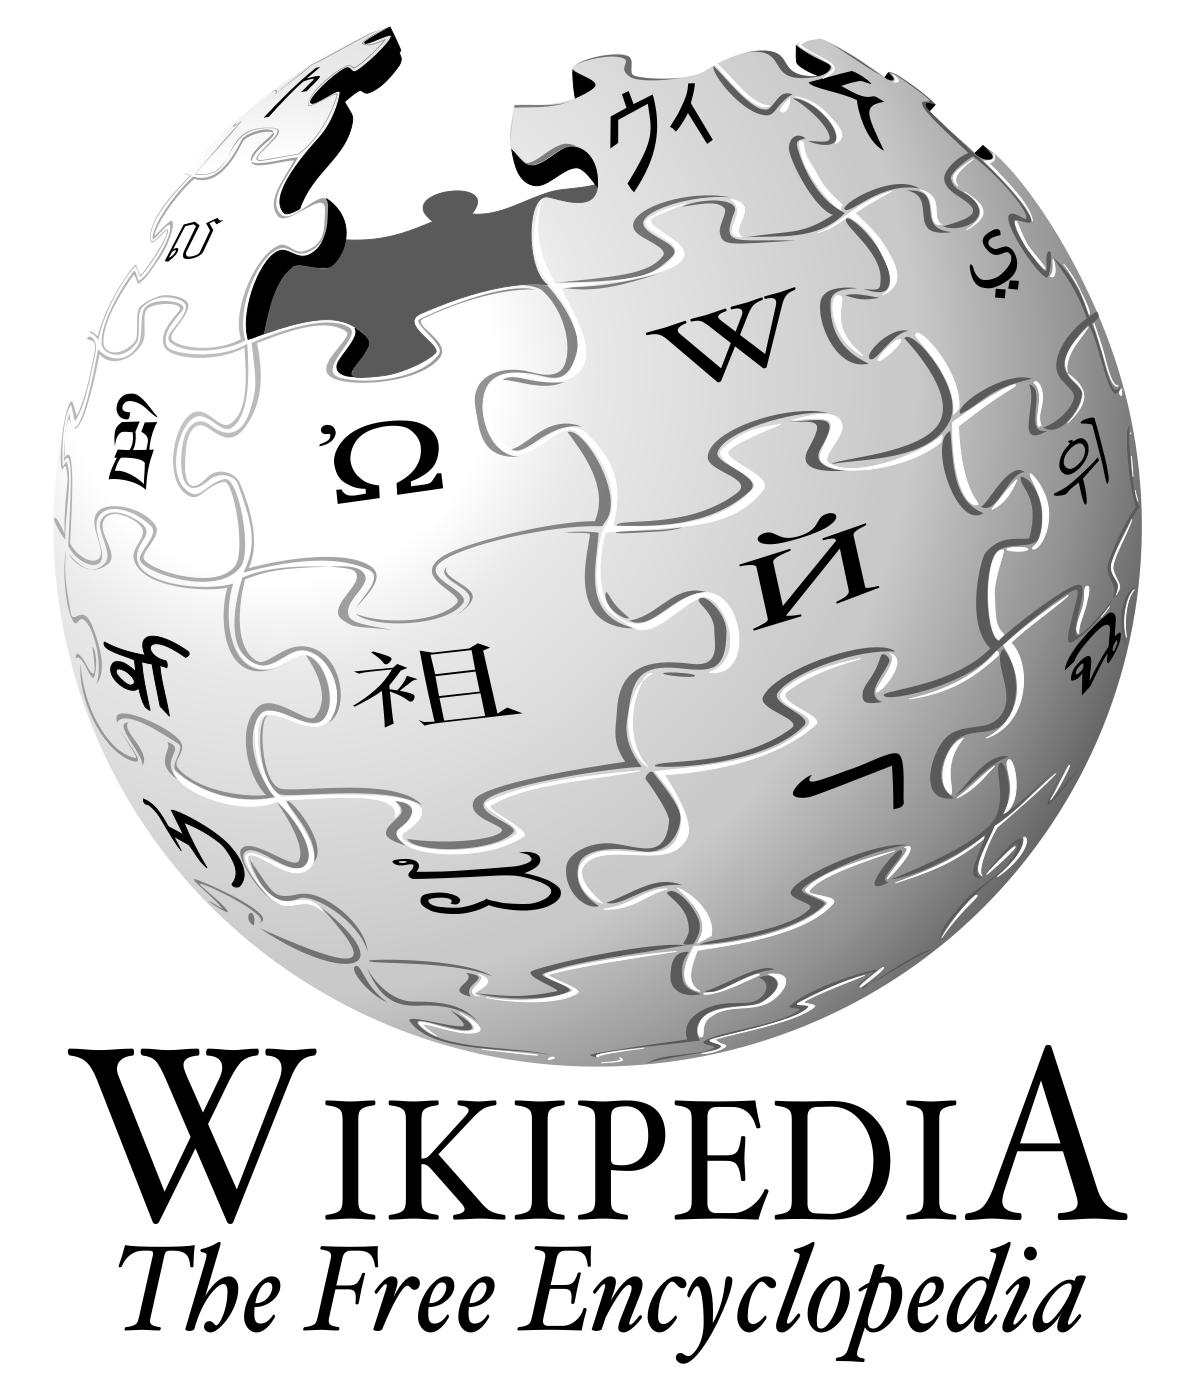 Википедия https ru wikipedia org. Википедия картинки. Википедия логотип. Значок Википедии. Ремипедия.